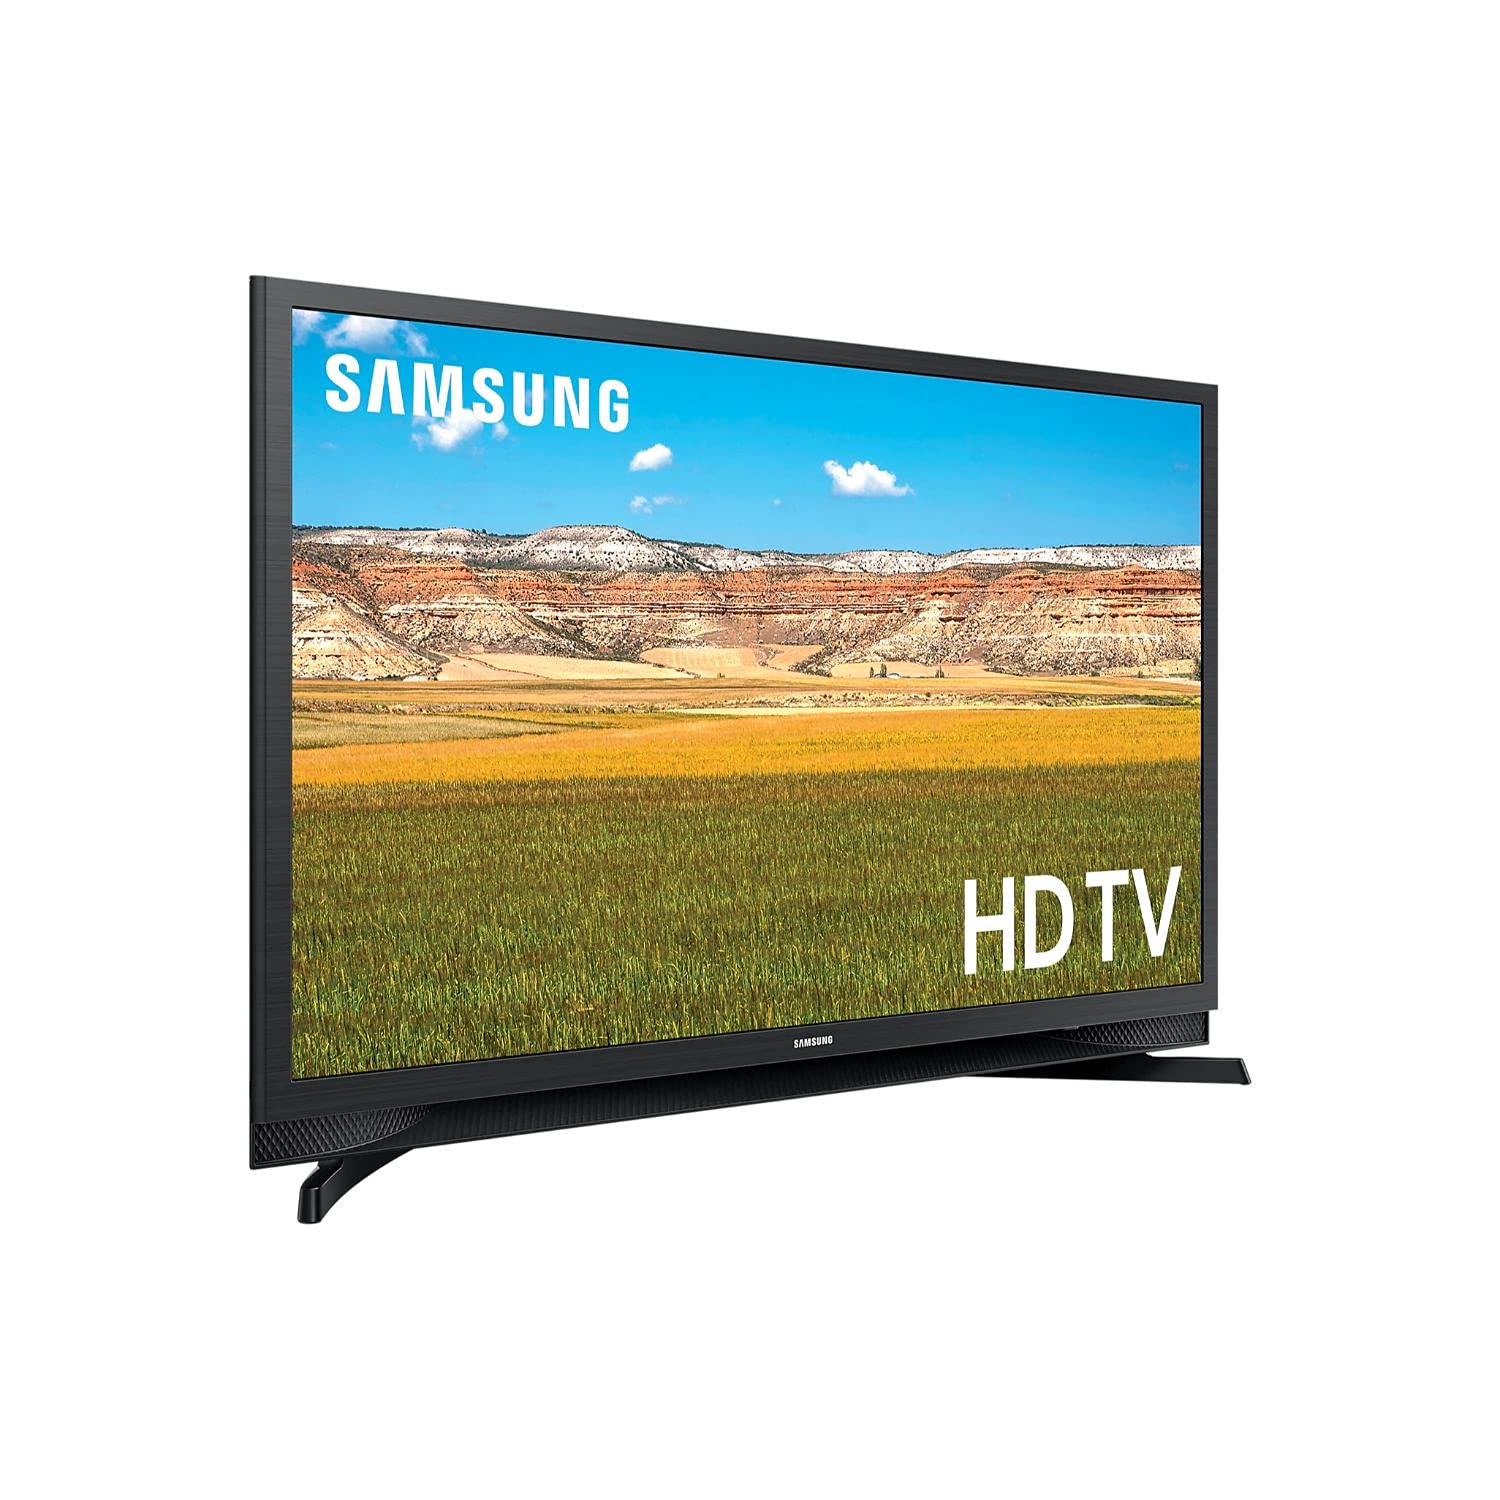 Samsung 80 cm UA32T4600  (32 Inches) HD Ready Smart LED TV (Black)